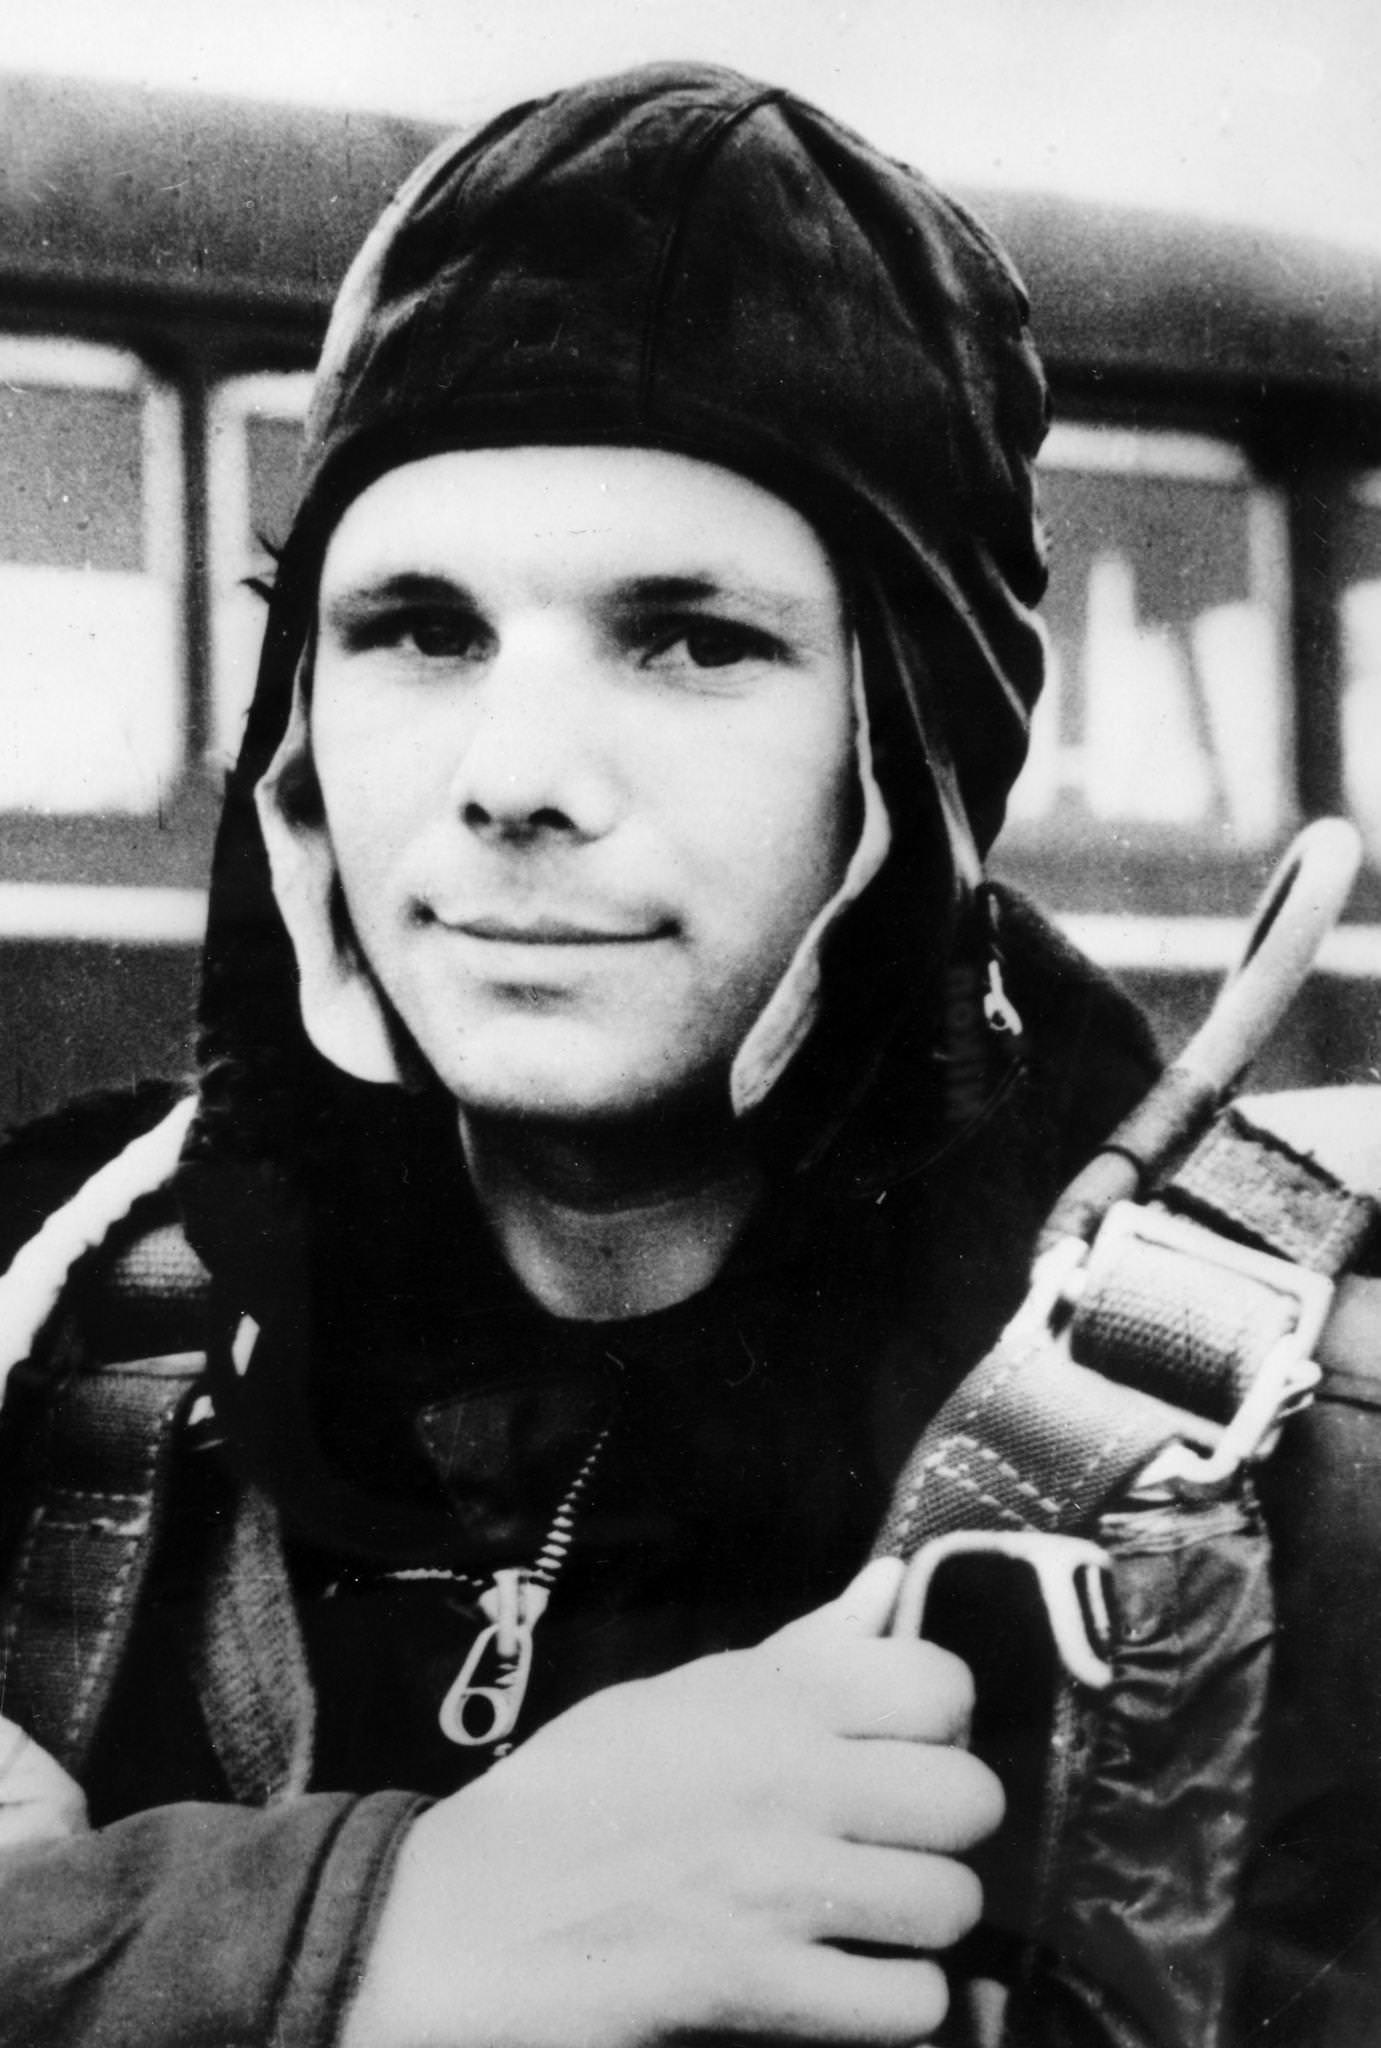 Yuri Gagarin in his flying gear, 1961